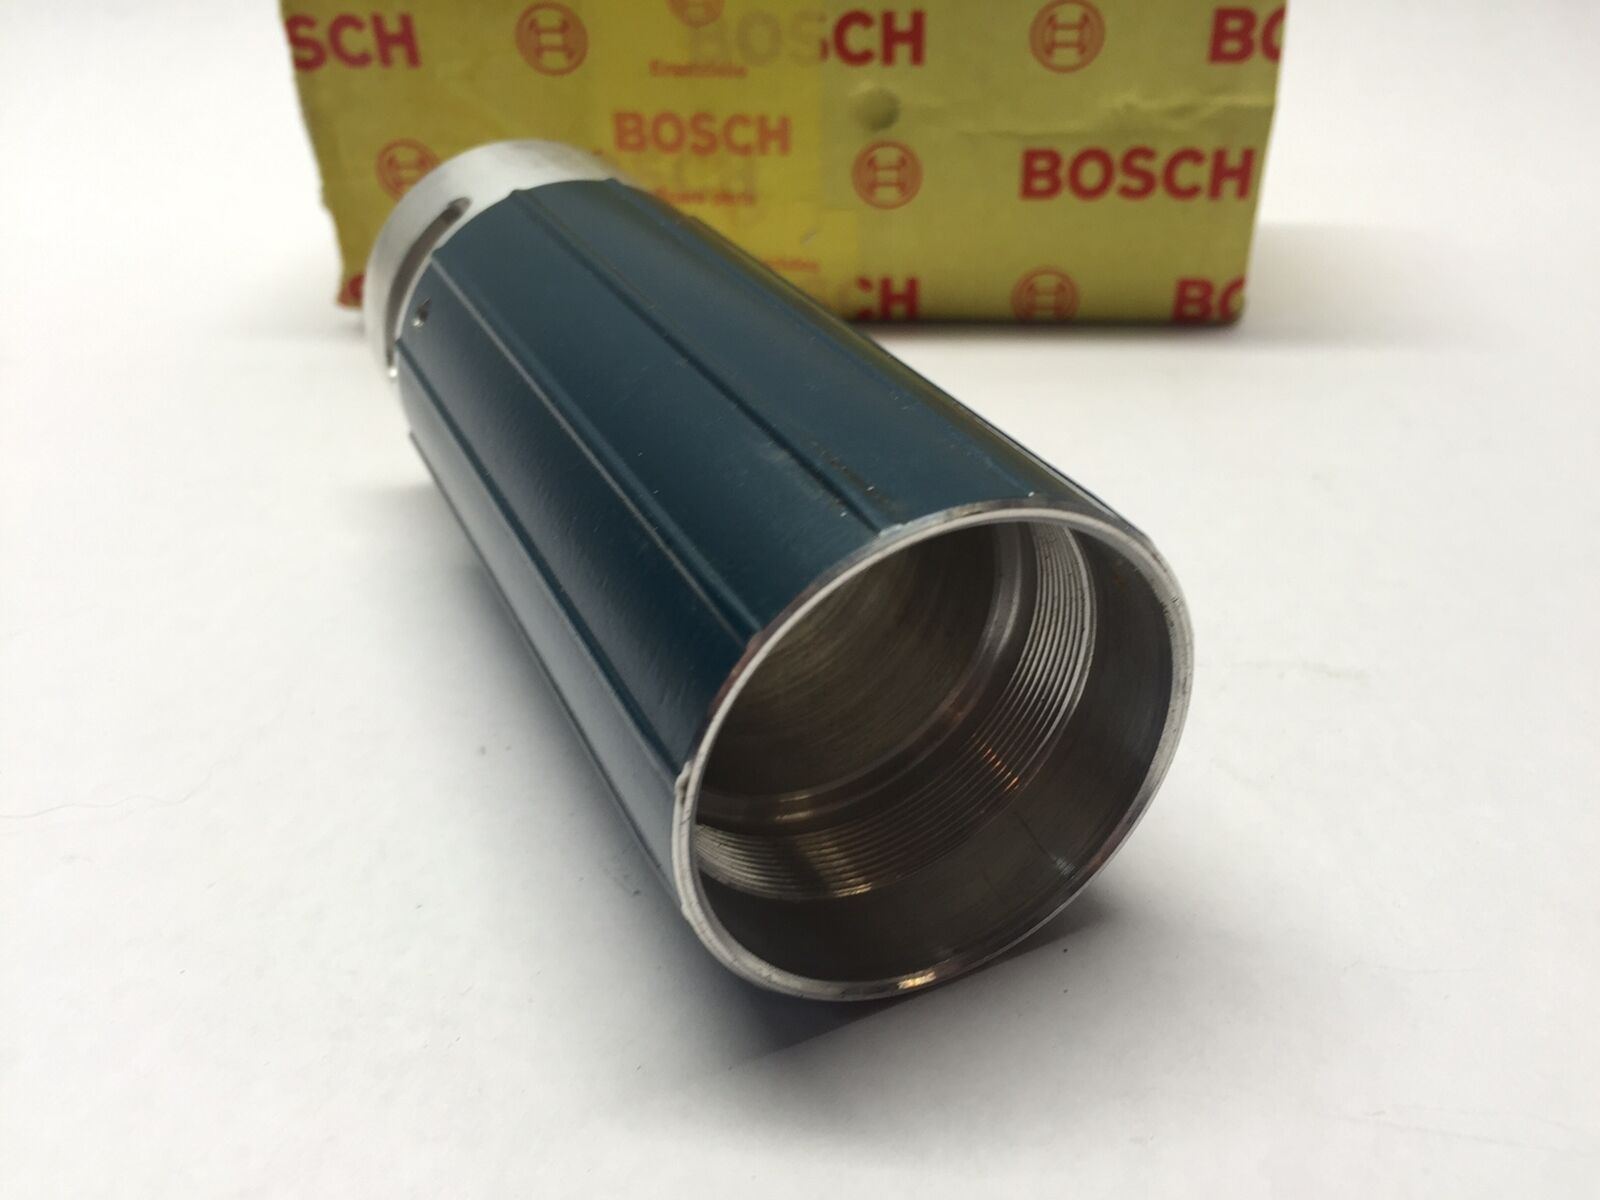 Bosch Genuine 3600760023 Drill Housing, 468082290, 3 600 760 023 008 NEW